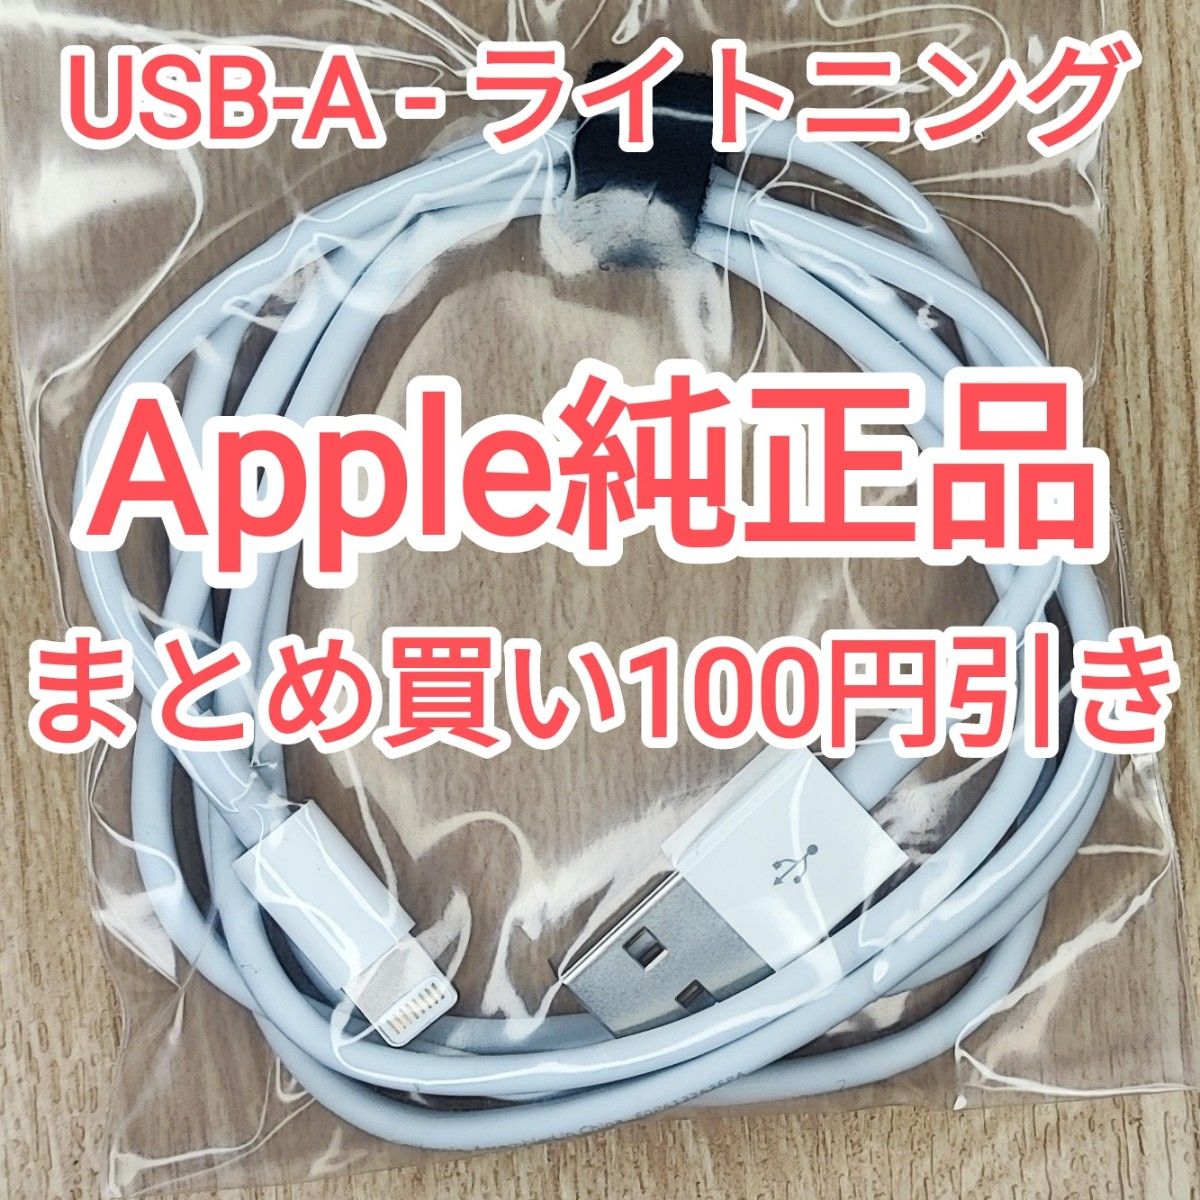 12　apple純正 ライトニングケーブル iPhone iPod touch 純正品付属品正規品